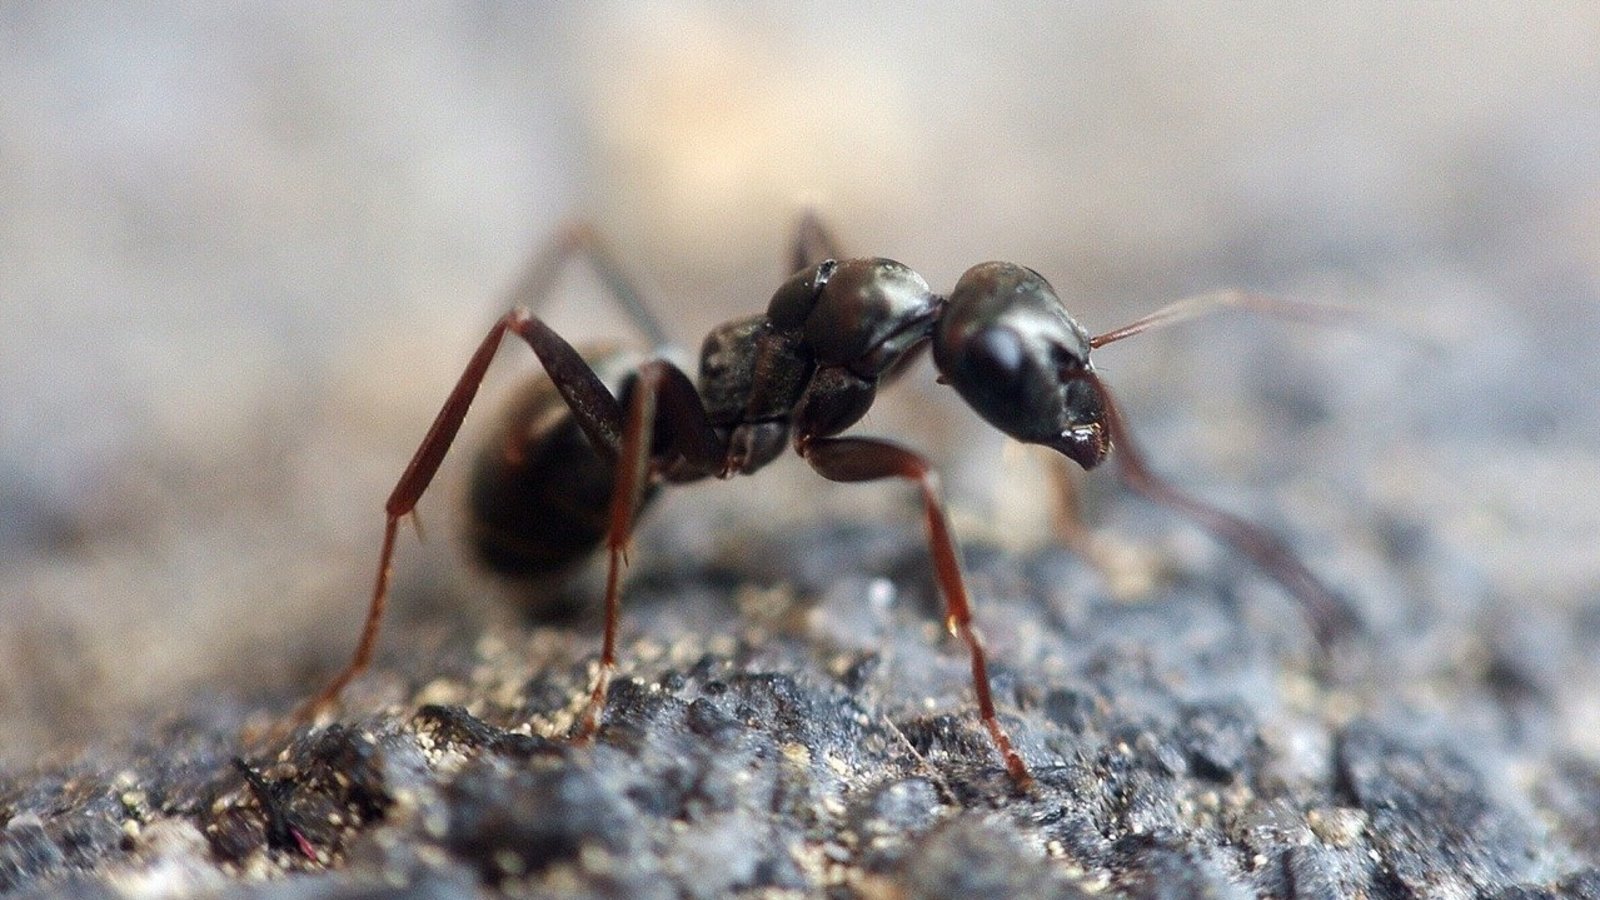 Comment creuser un tunnel comme une fourmi | Agence Science-Presse